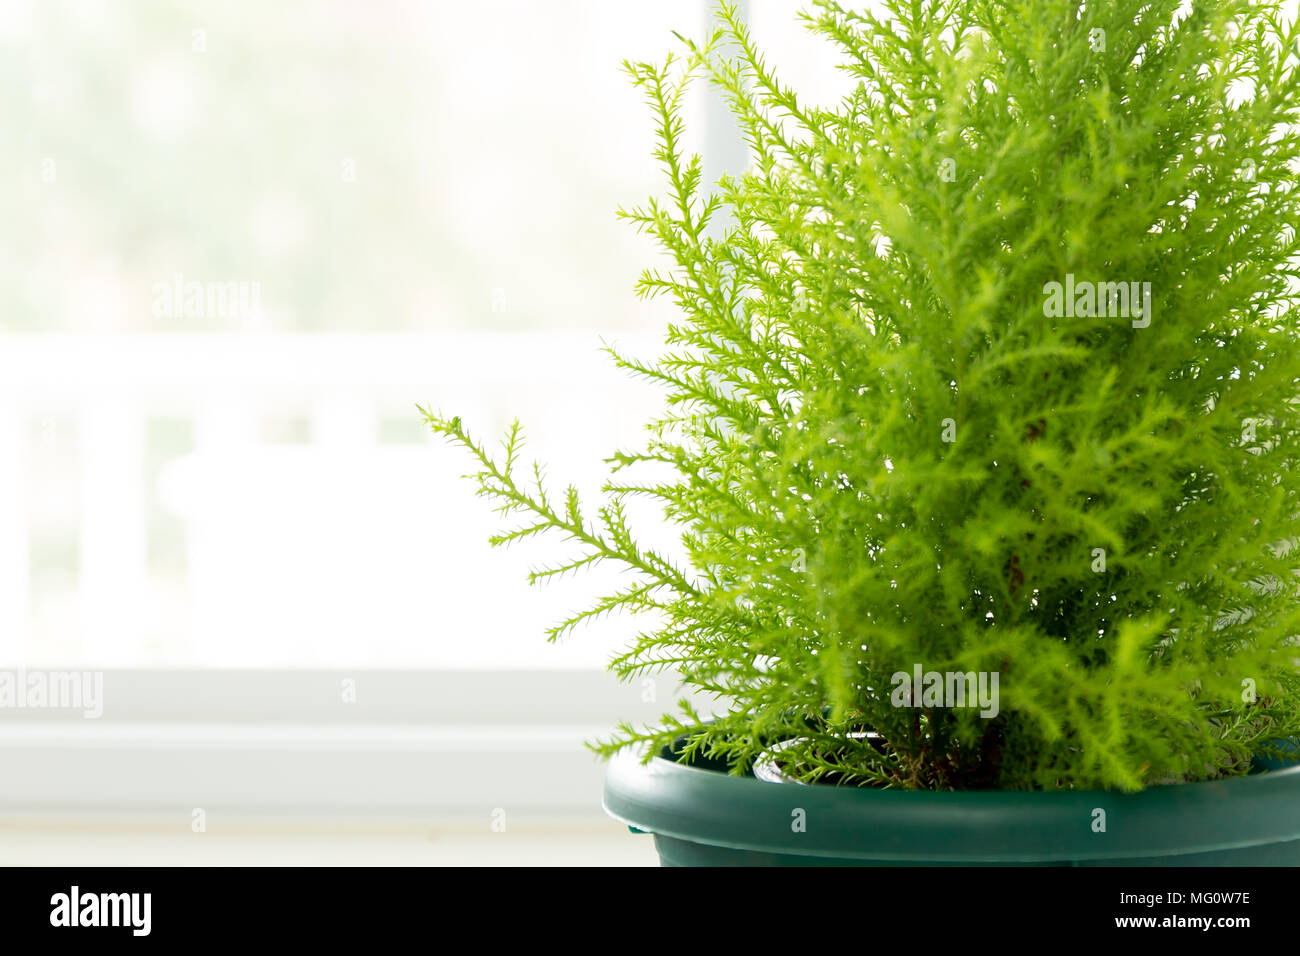 Lemon Cypress plant in green pot next to window Stock Photo